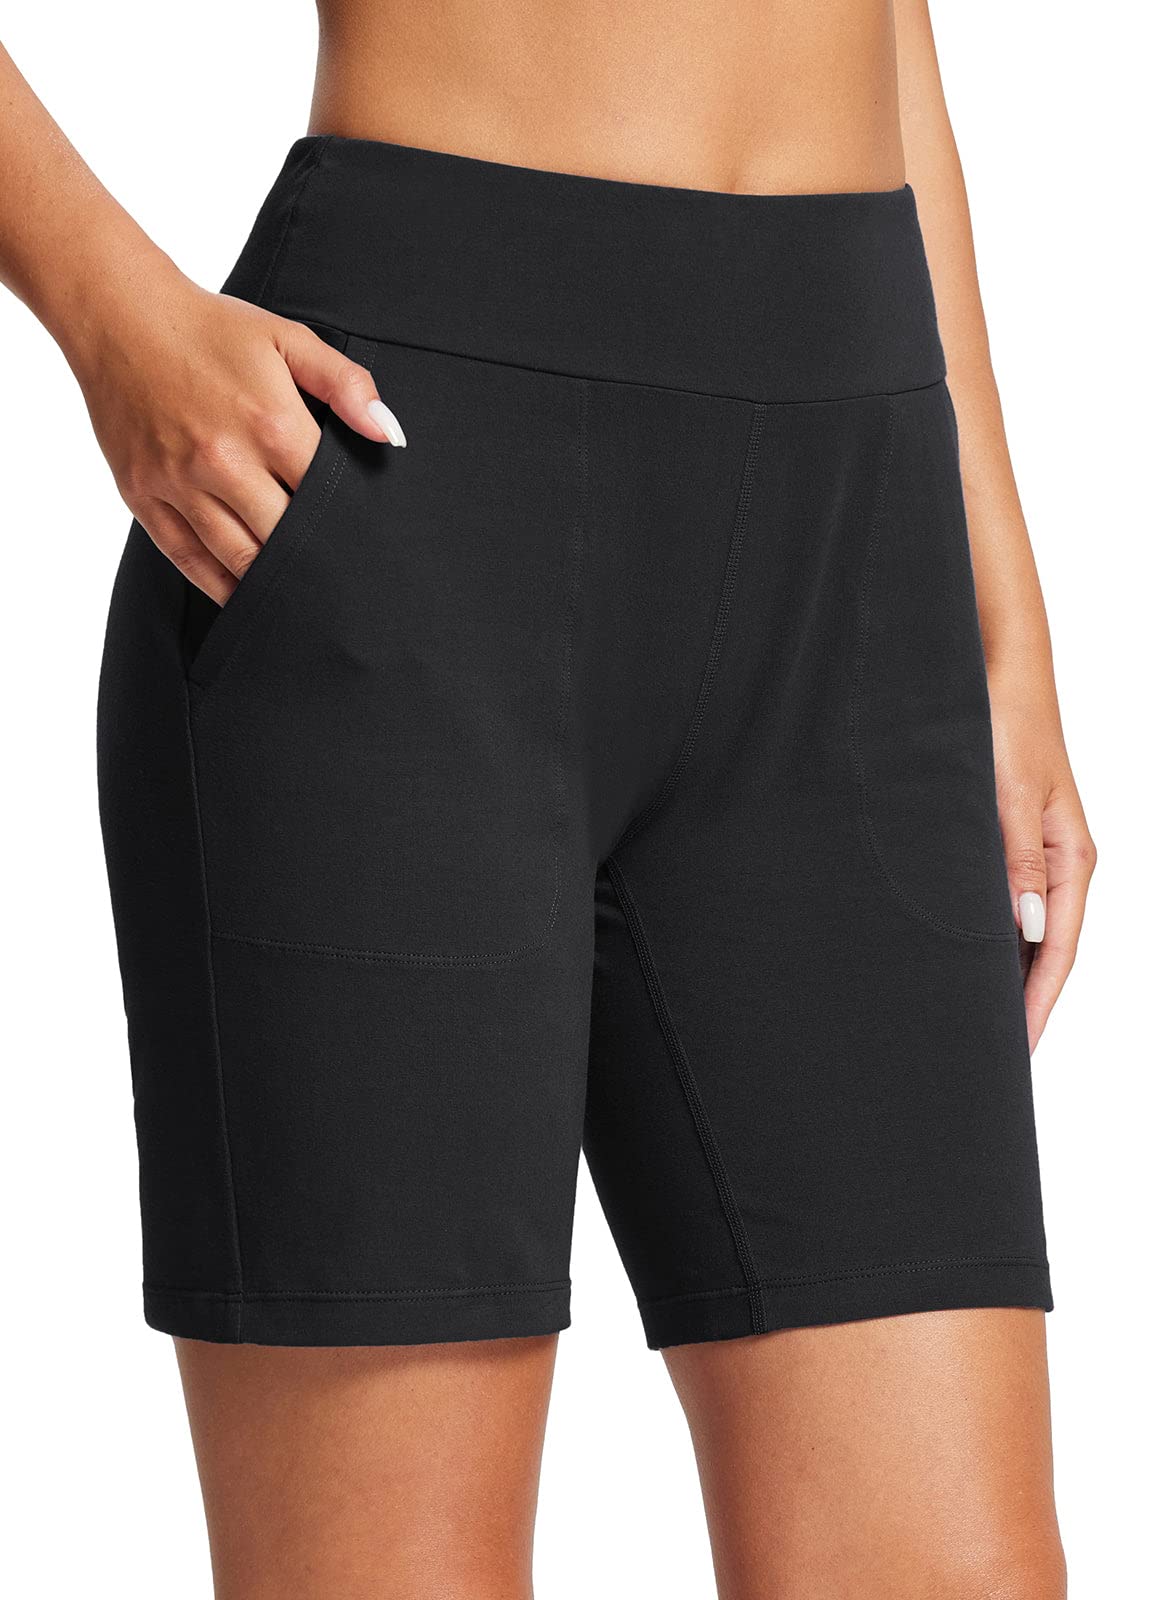 BALEAF Women's Bermuda Shorts Cotton Long Shorts with Pockets